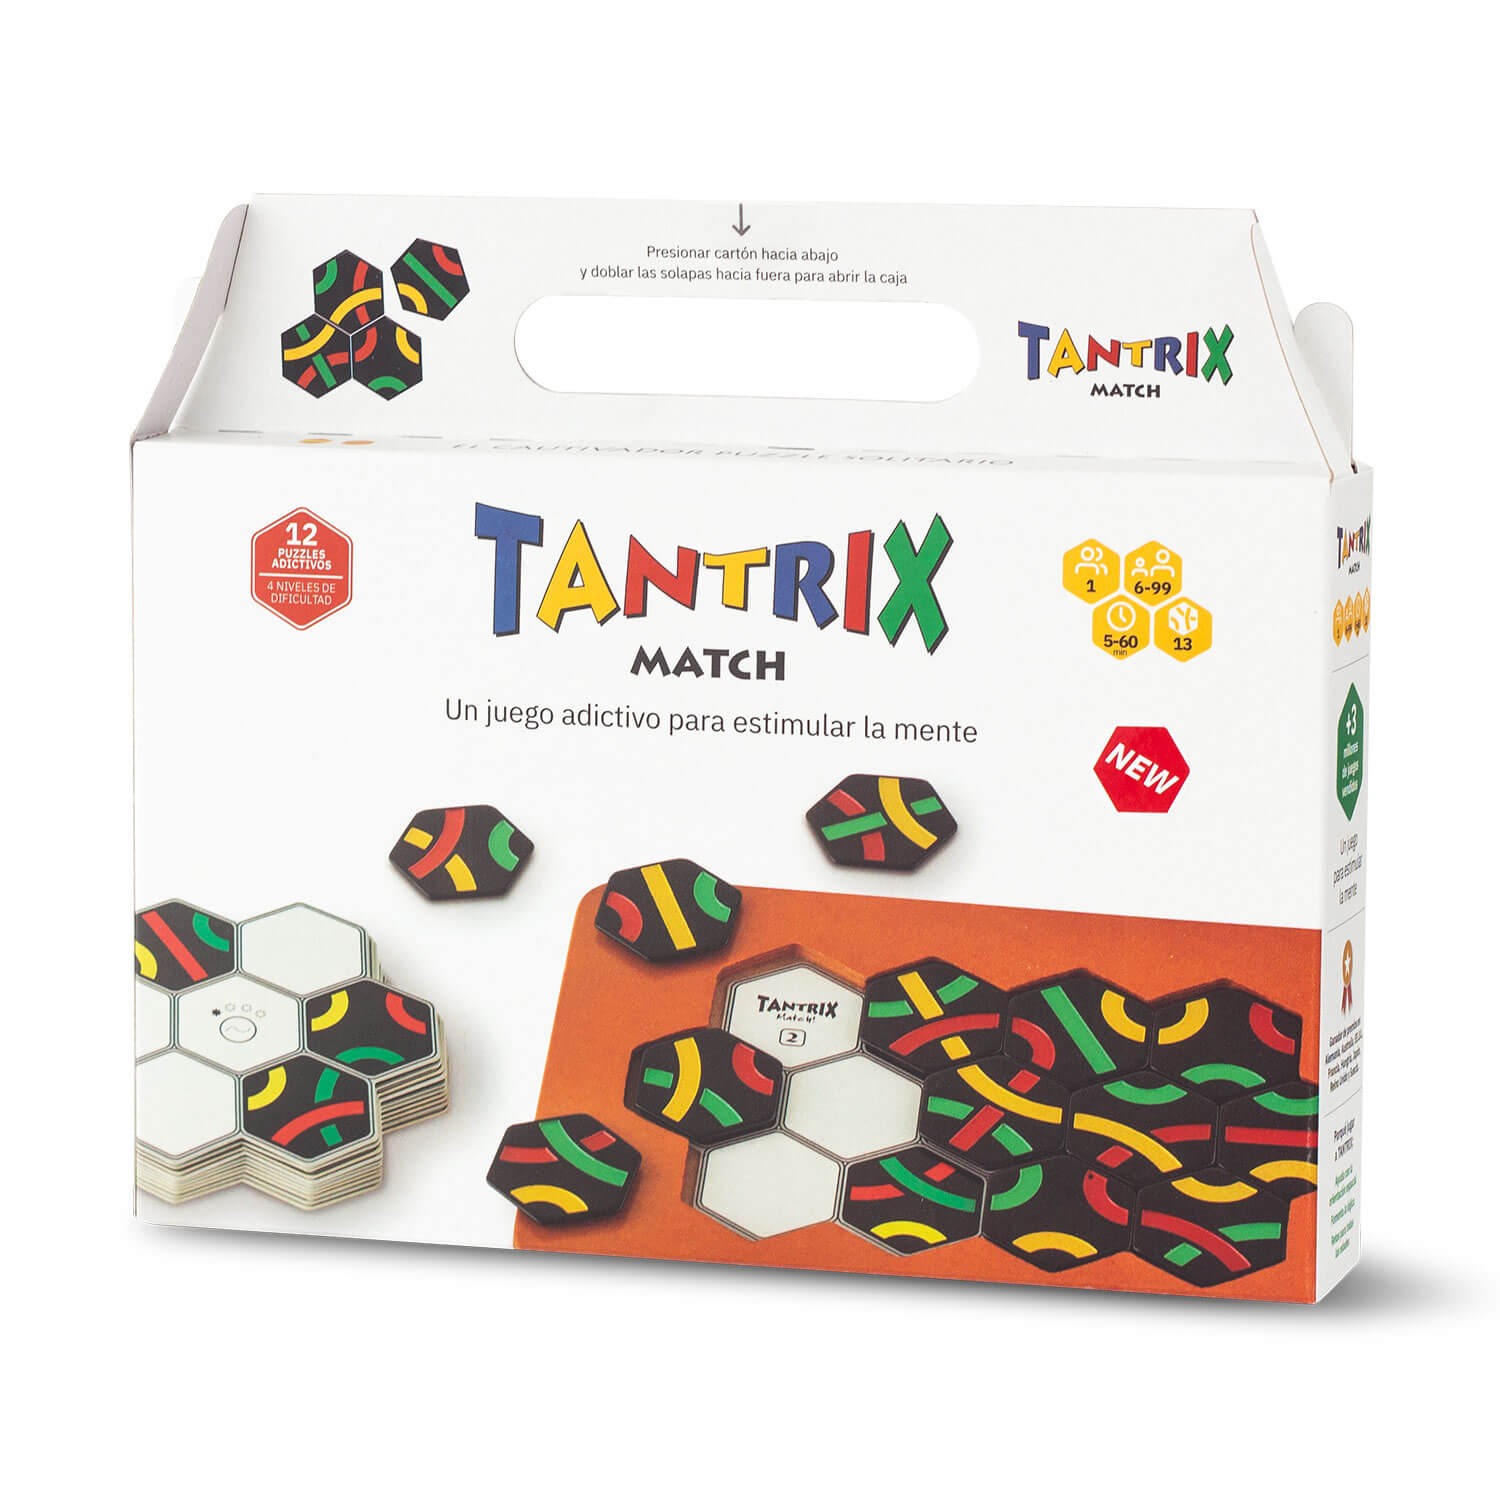 RUSSIA-JULY 7, 2013: Logic Game Tantrix.Tantrix Is A Hexagonal